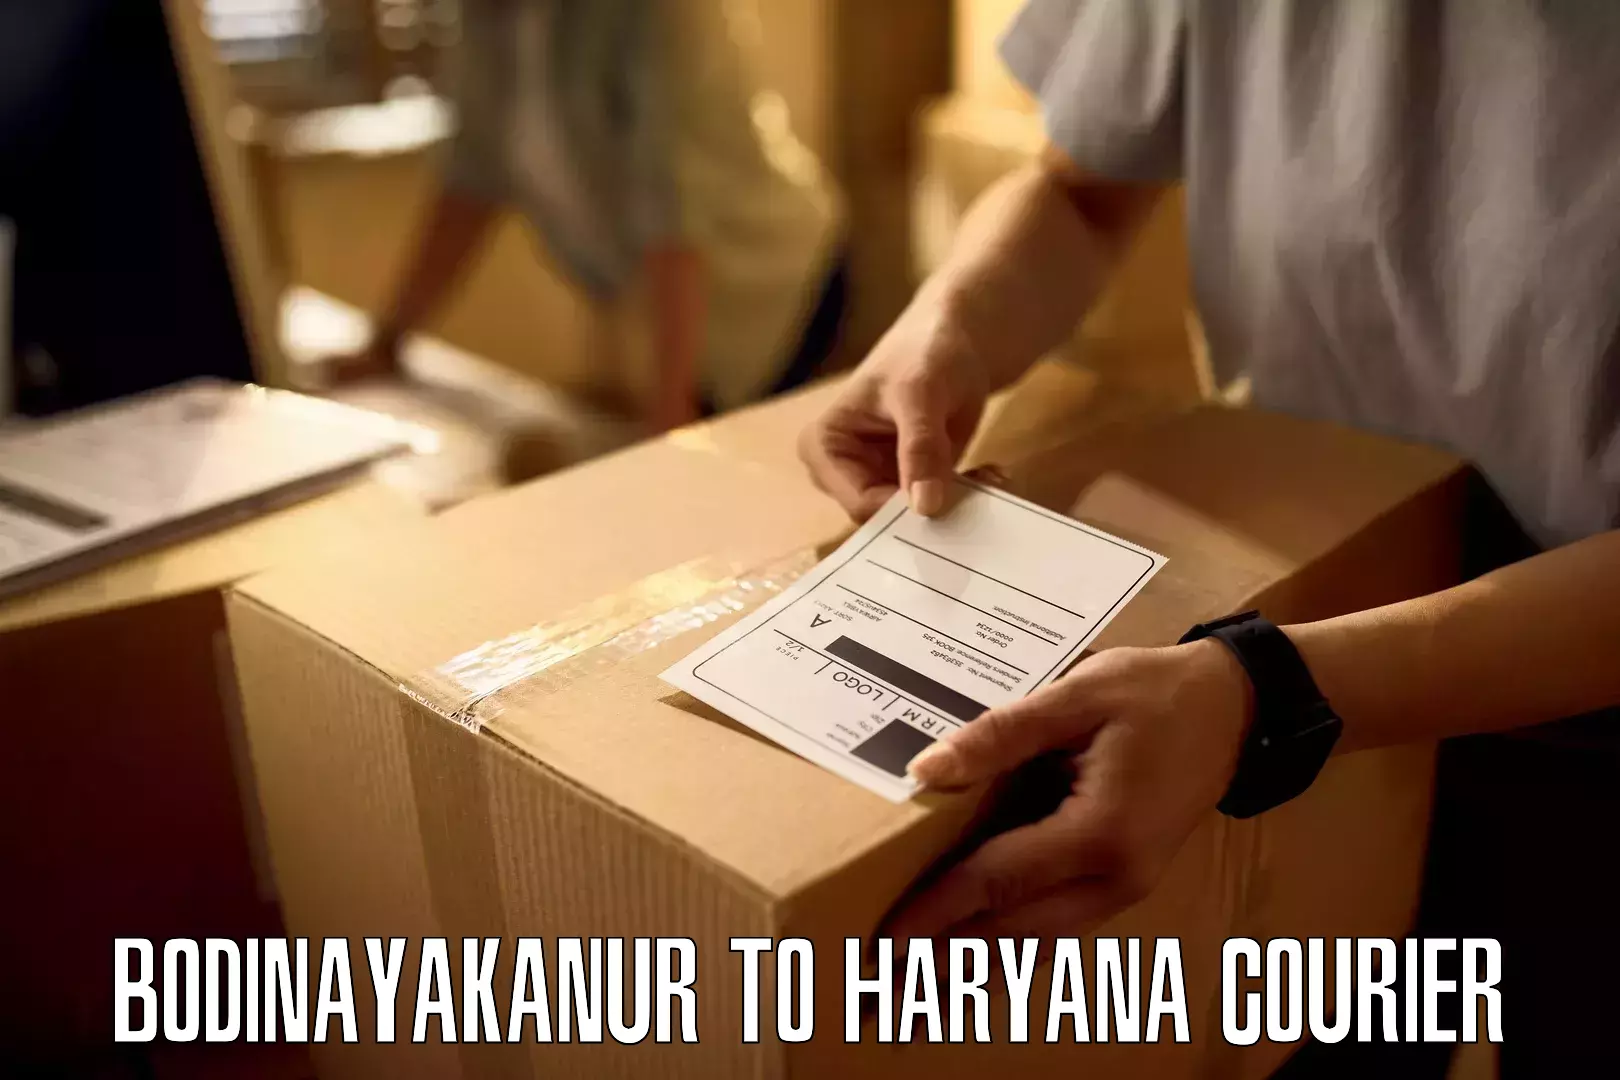 Courier service innovation Bodinayakanur to Haryana